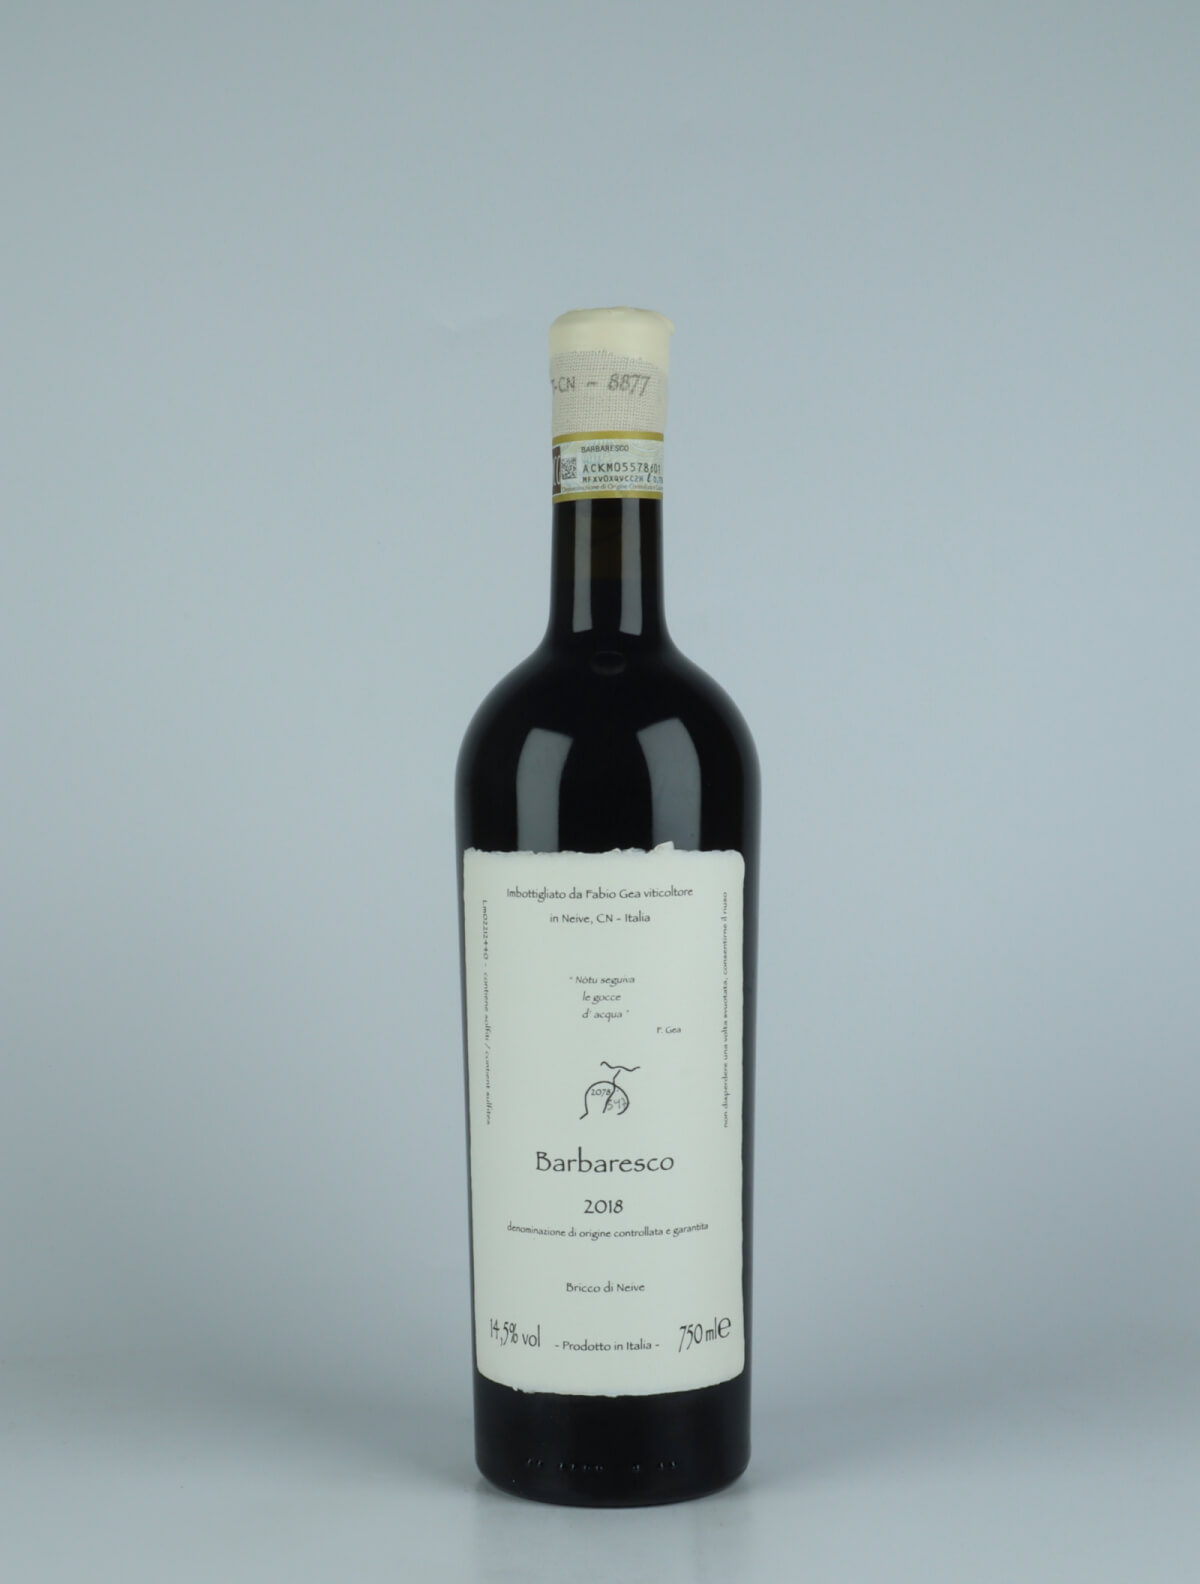 A bottle 2018 Barbaresco (Nòtu seguiva le gocce d'acqua) Red wine from Fabio Gea, Piedmont in Italy